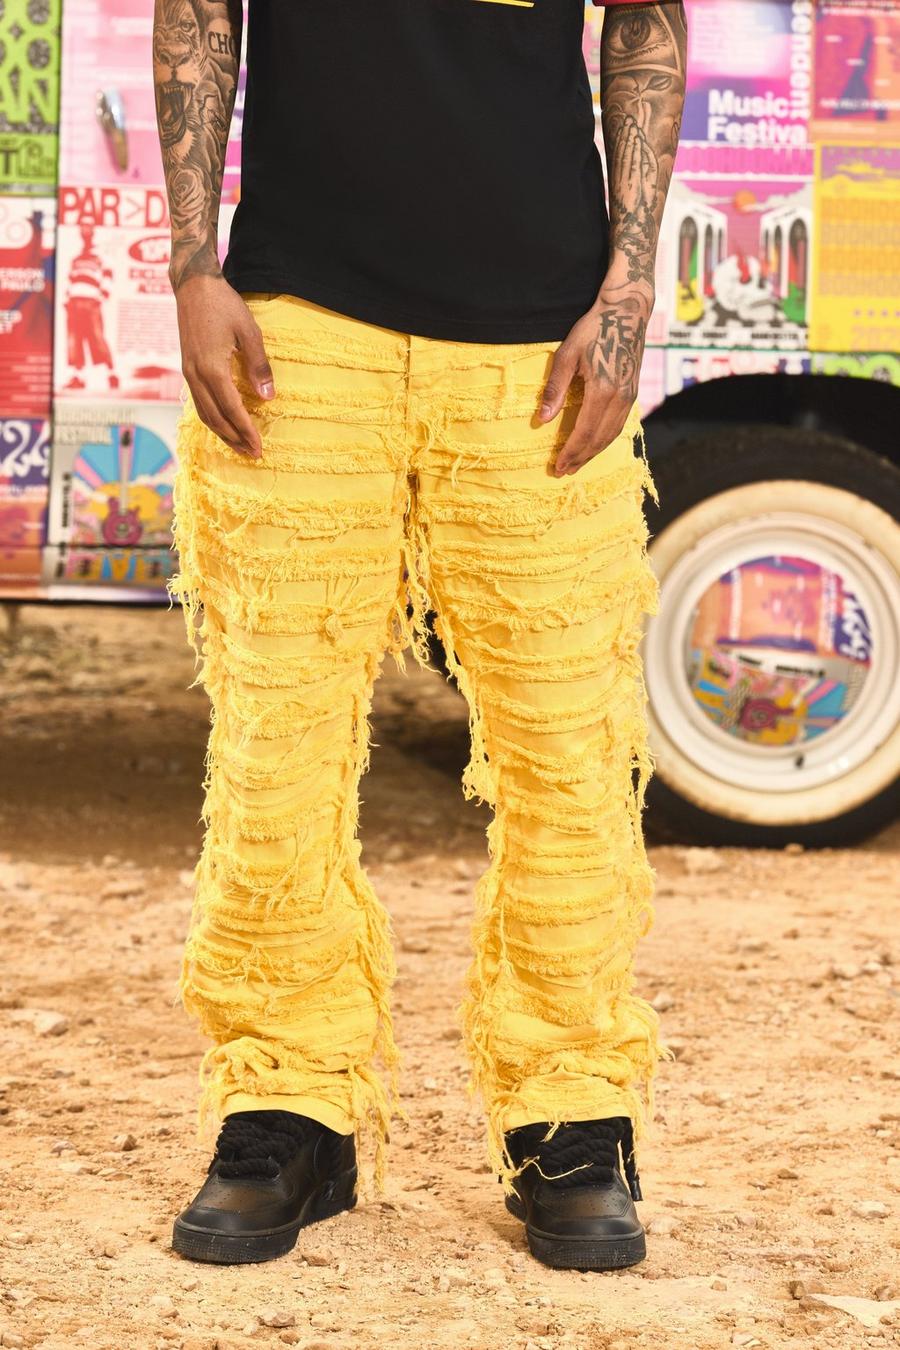 Lockere, extrem zerrissene Jeans in Gelb, Yellow